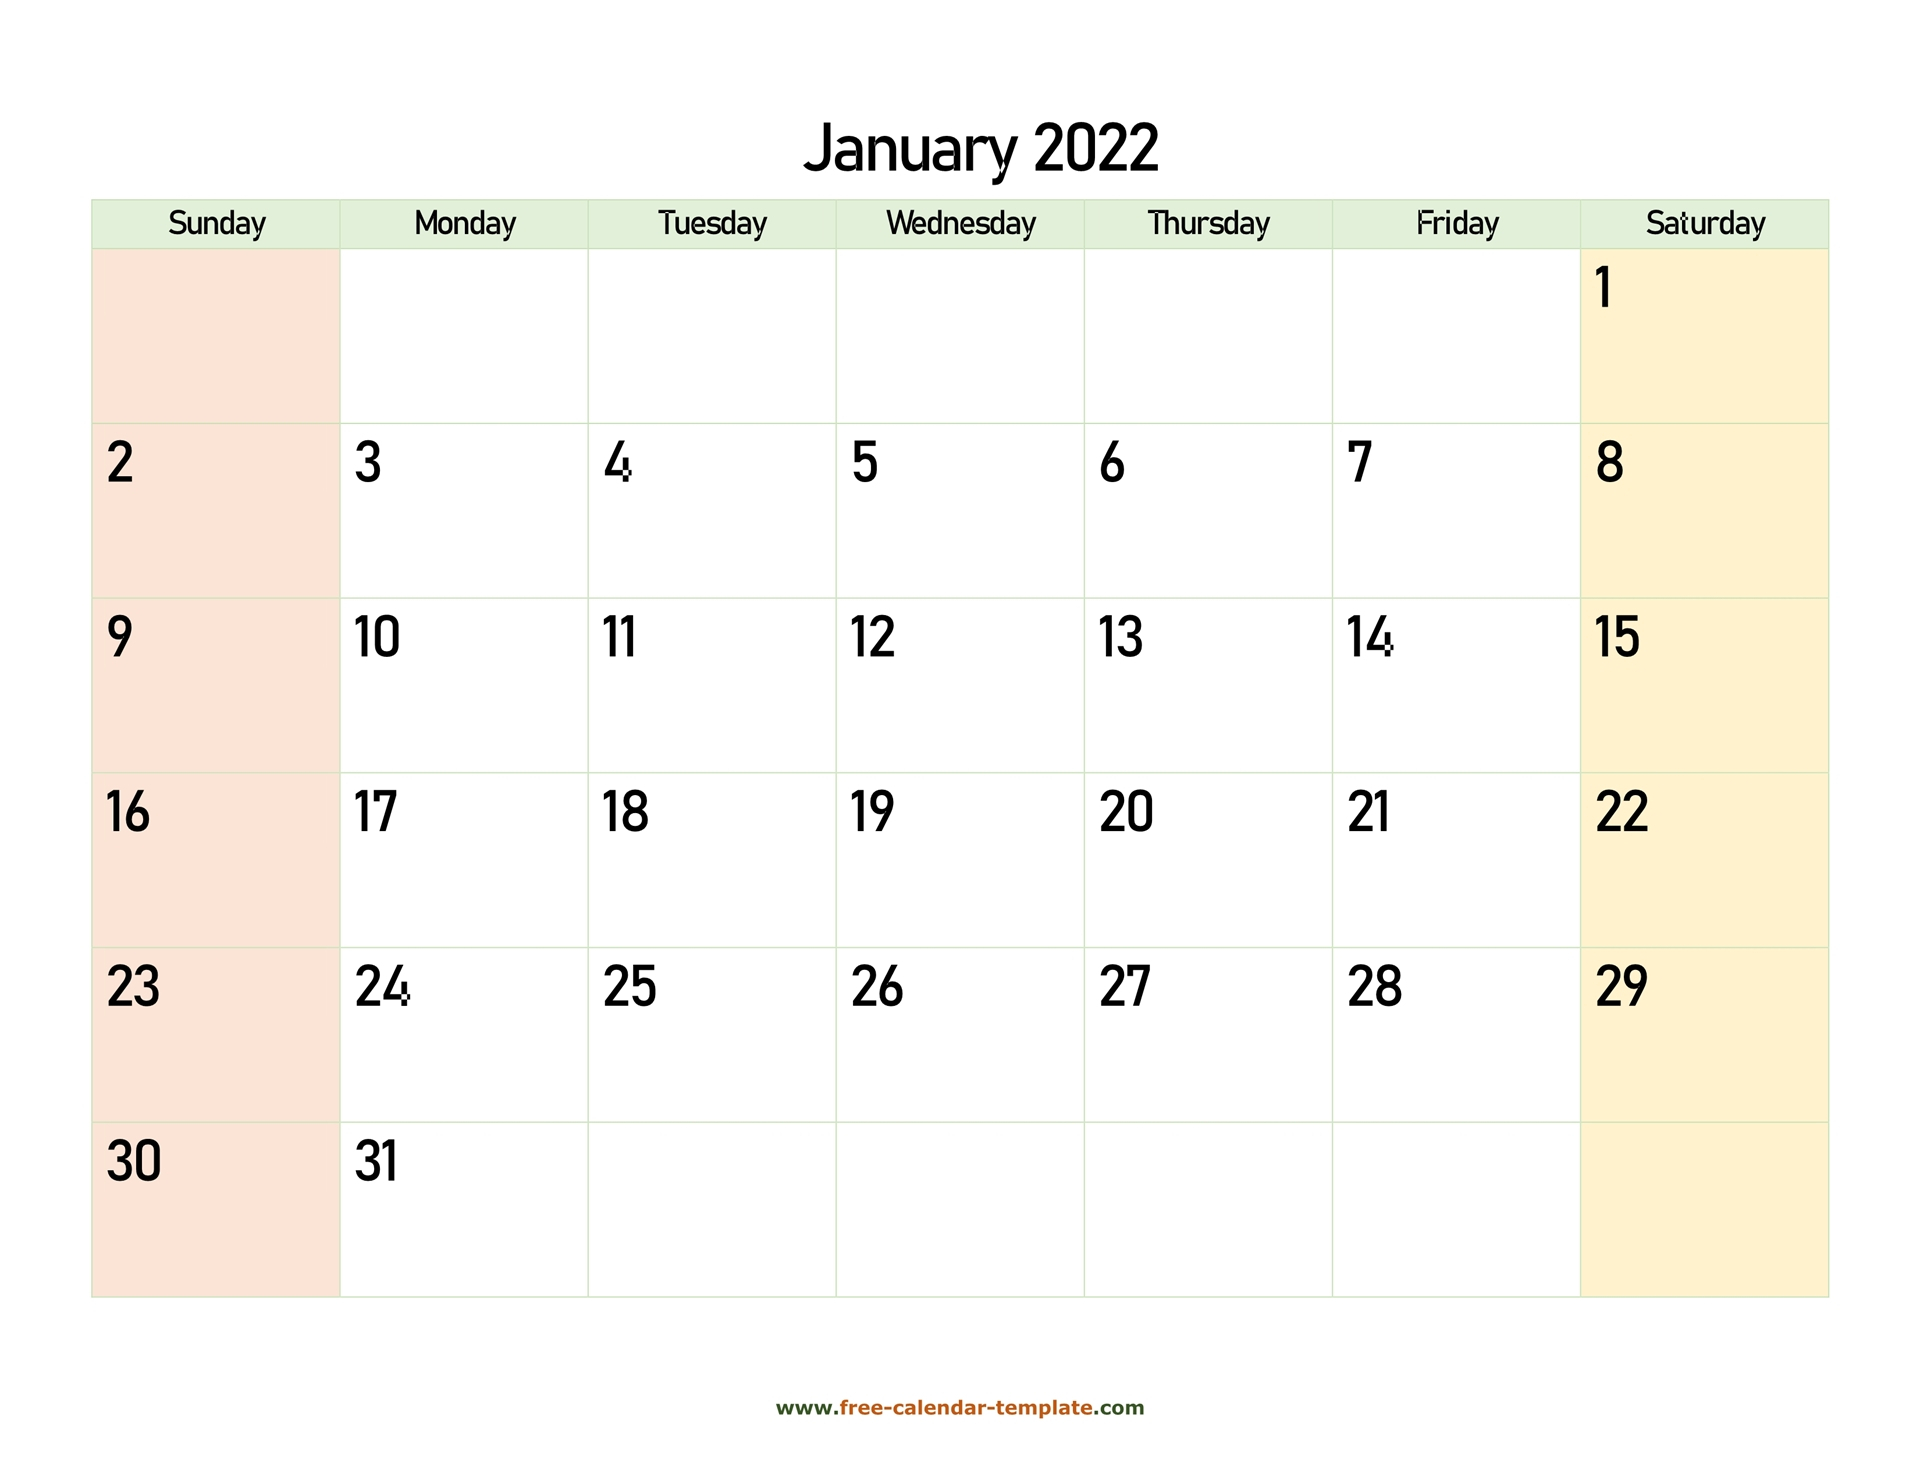 Catch Free Calendar For January 2022